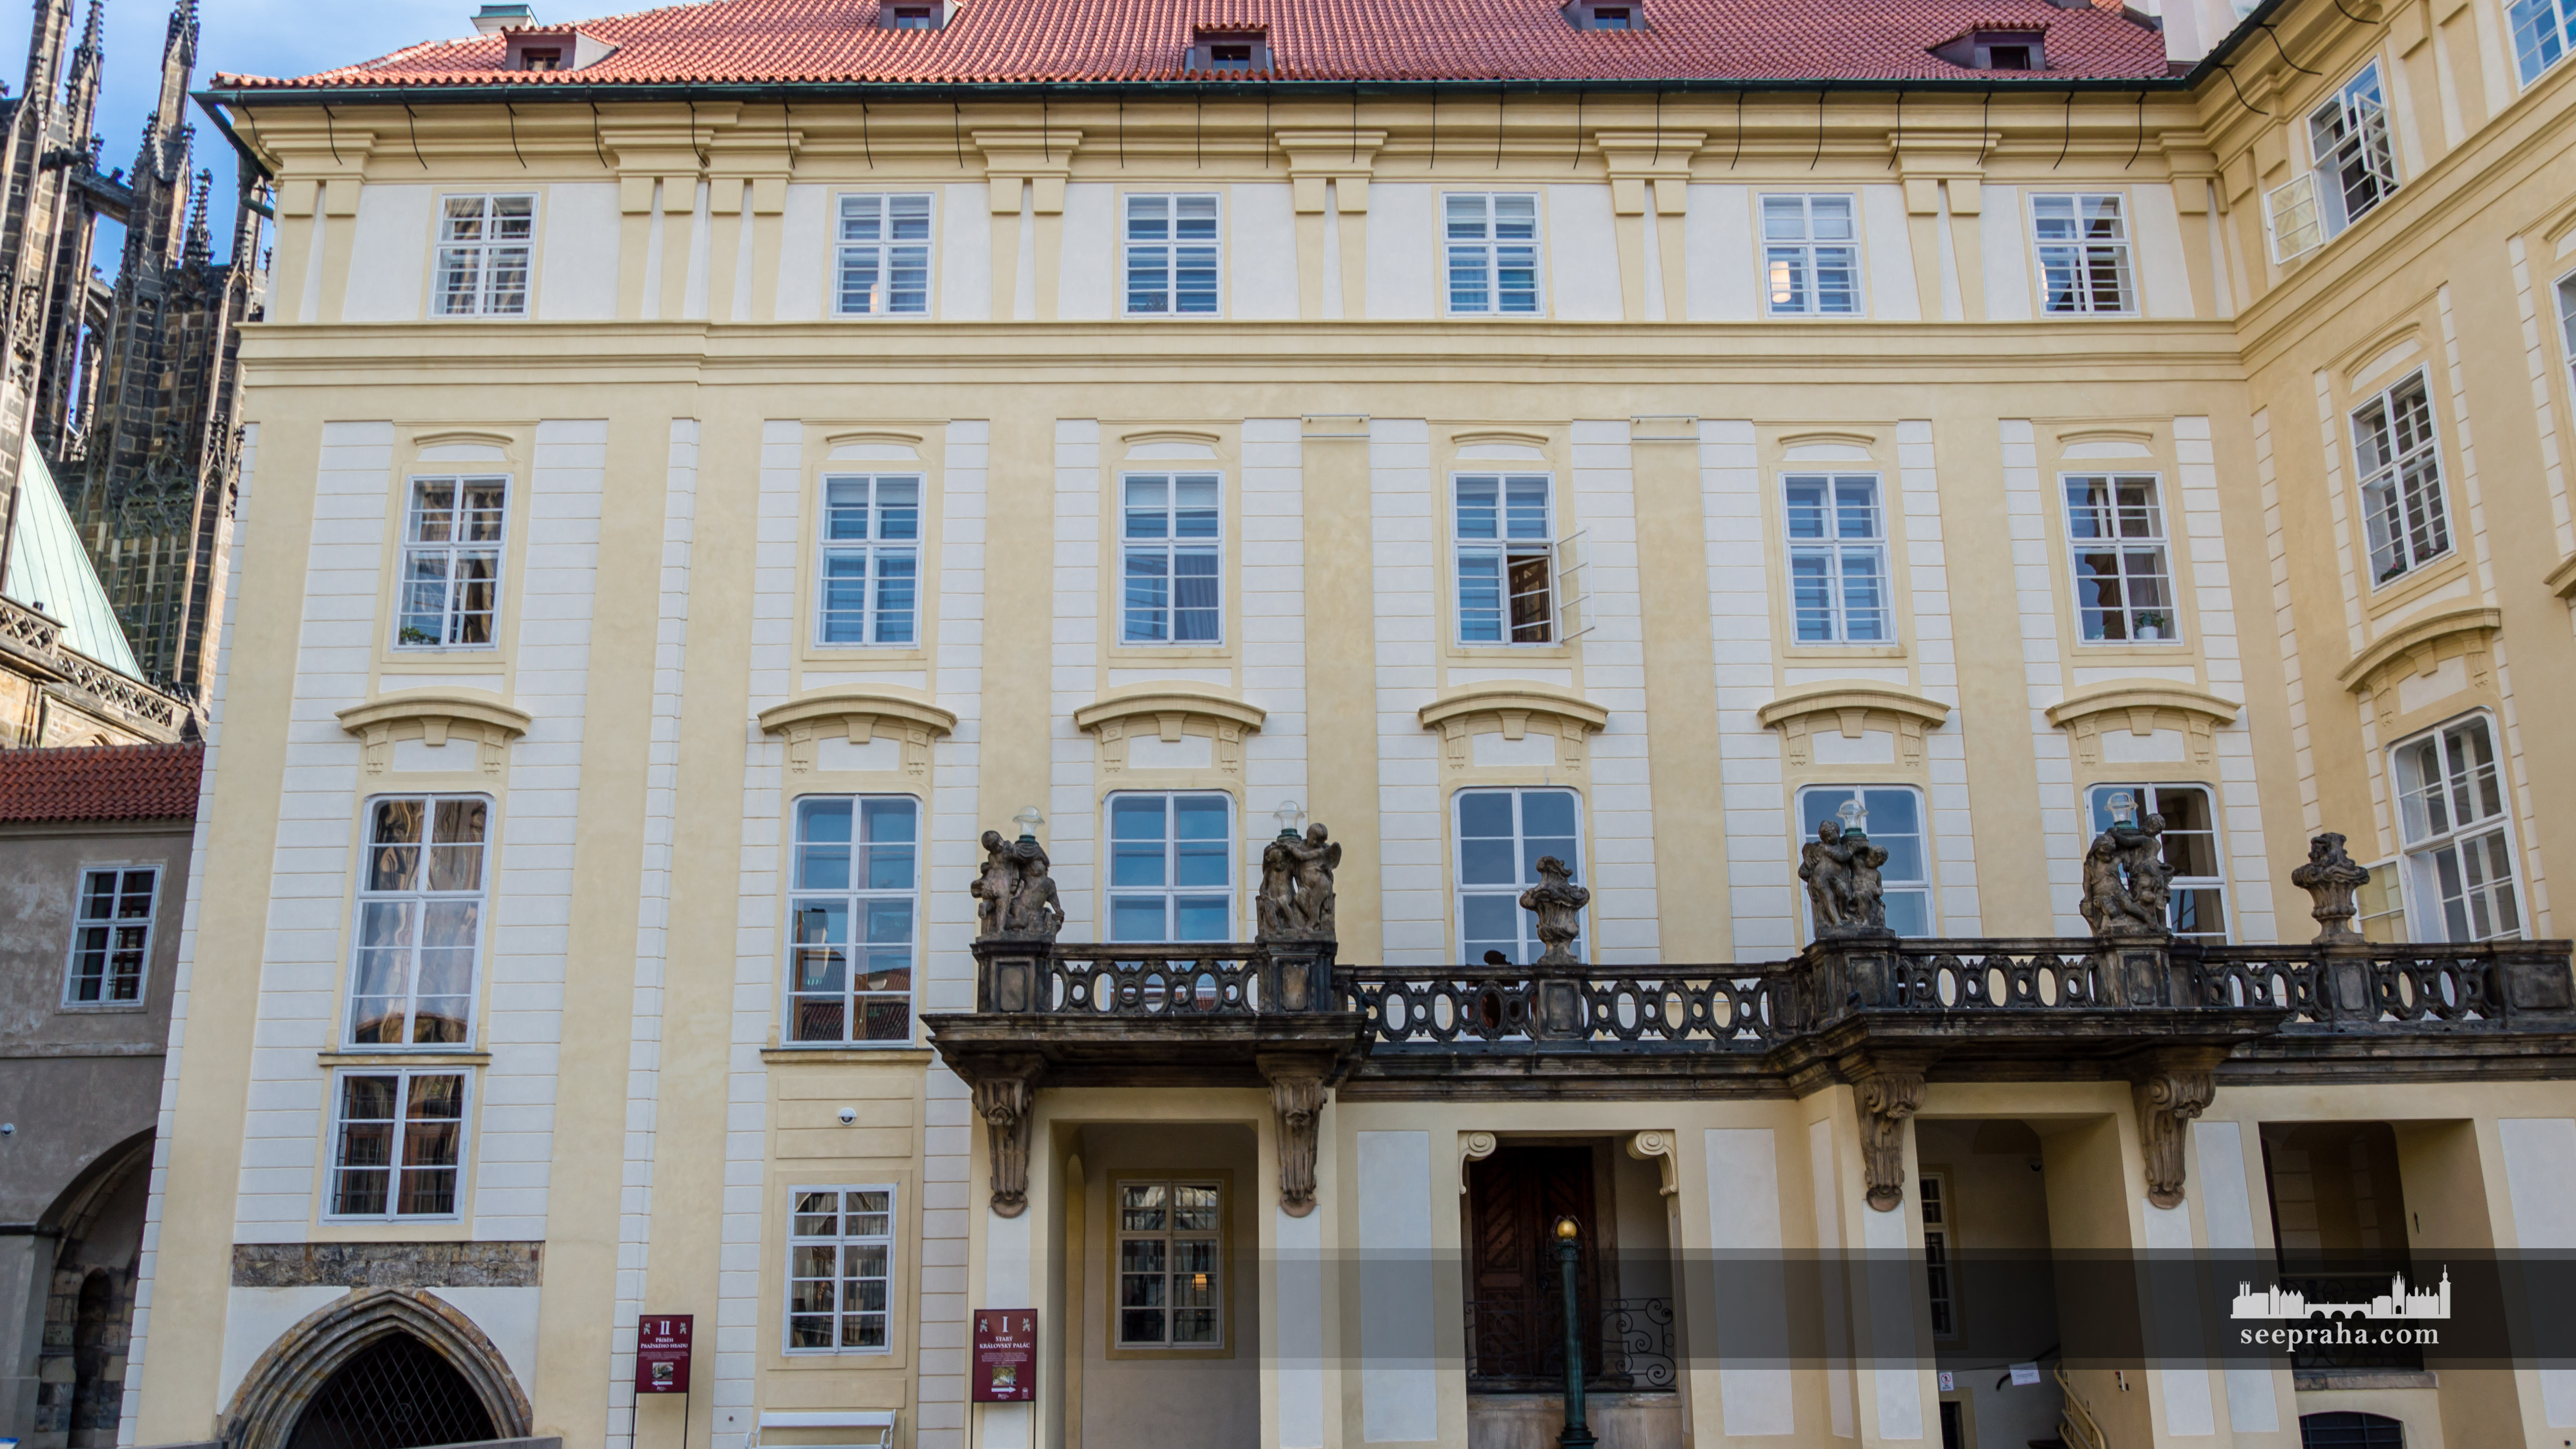 Old Royal Palace, Prague, Czech Republic